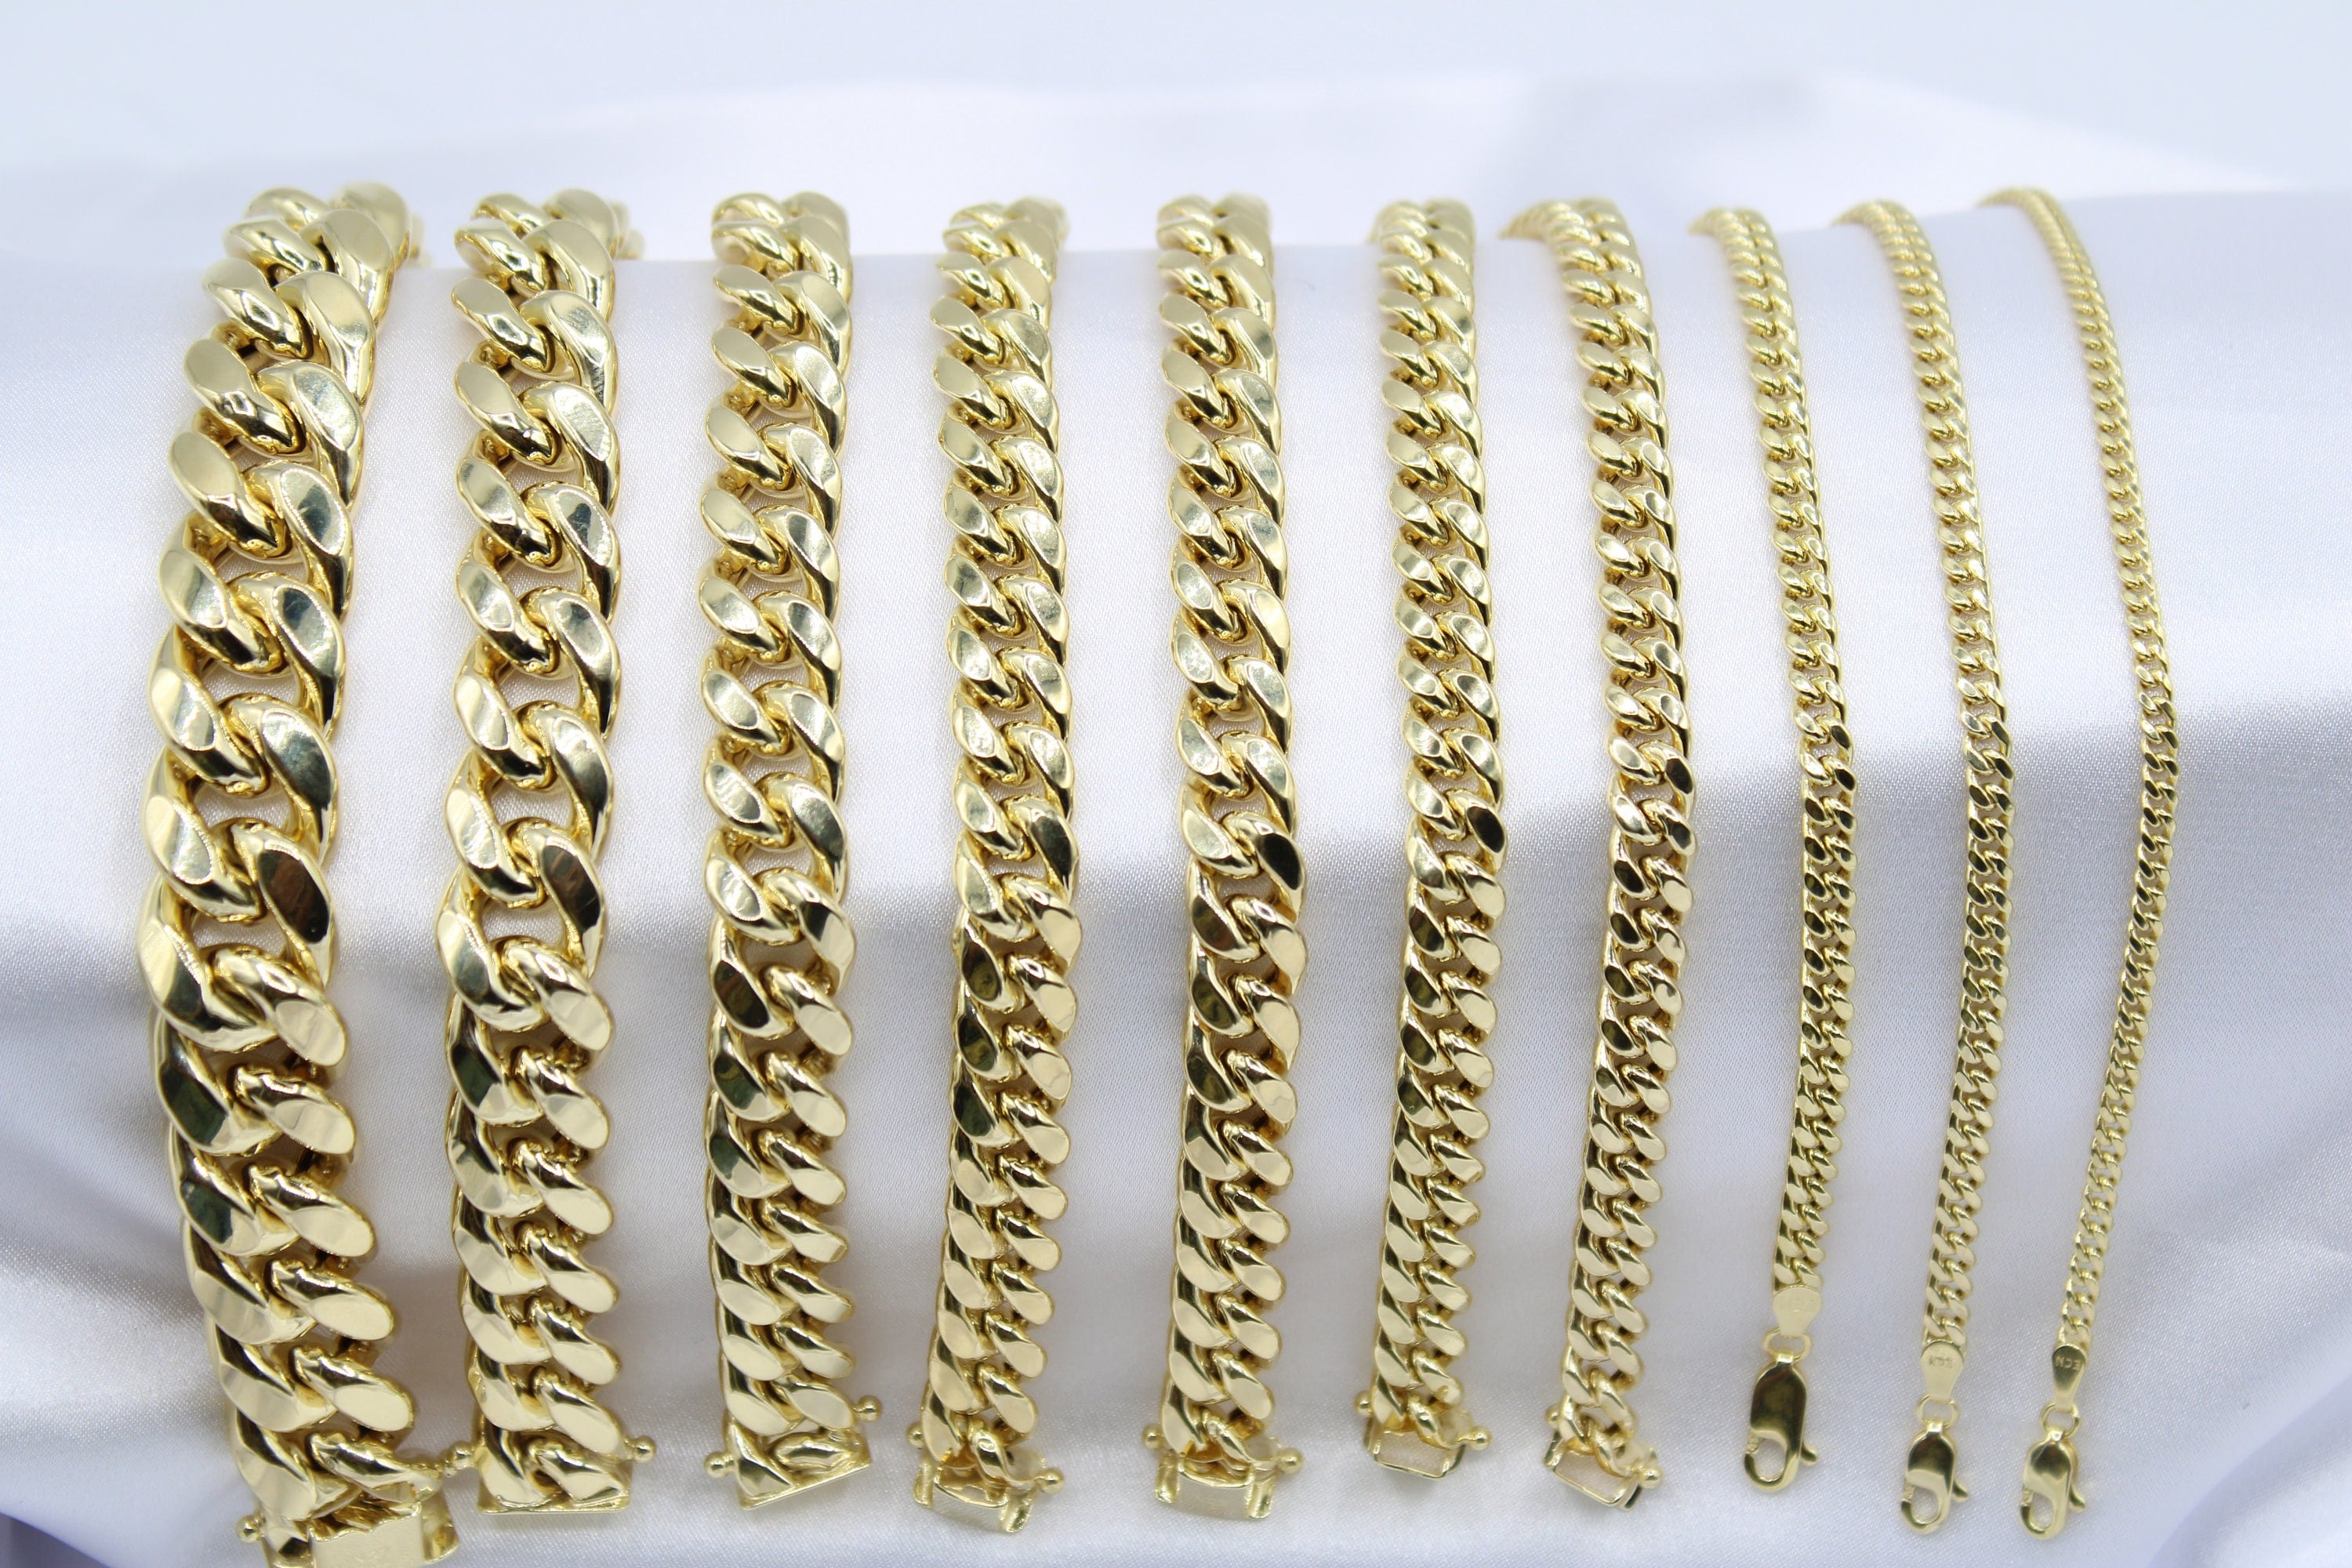 10 Solid Cuban Link Bracelet in 10K Yellow Gold - 445.6 Grams